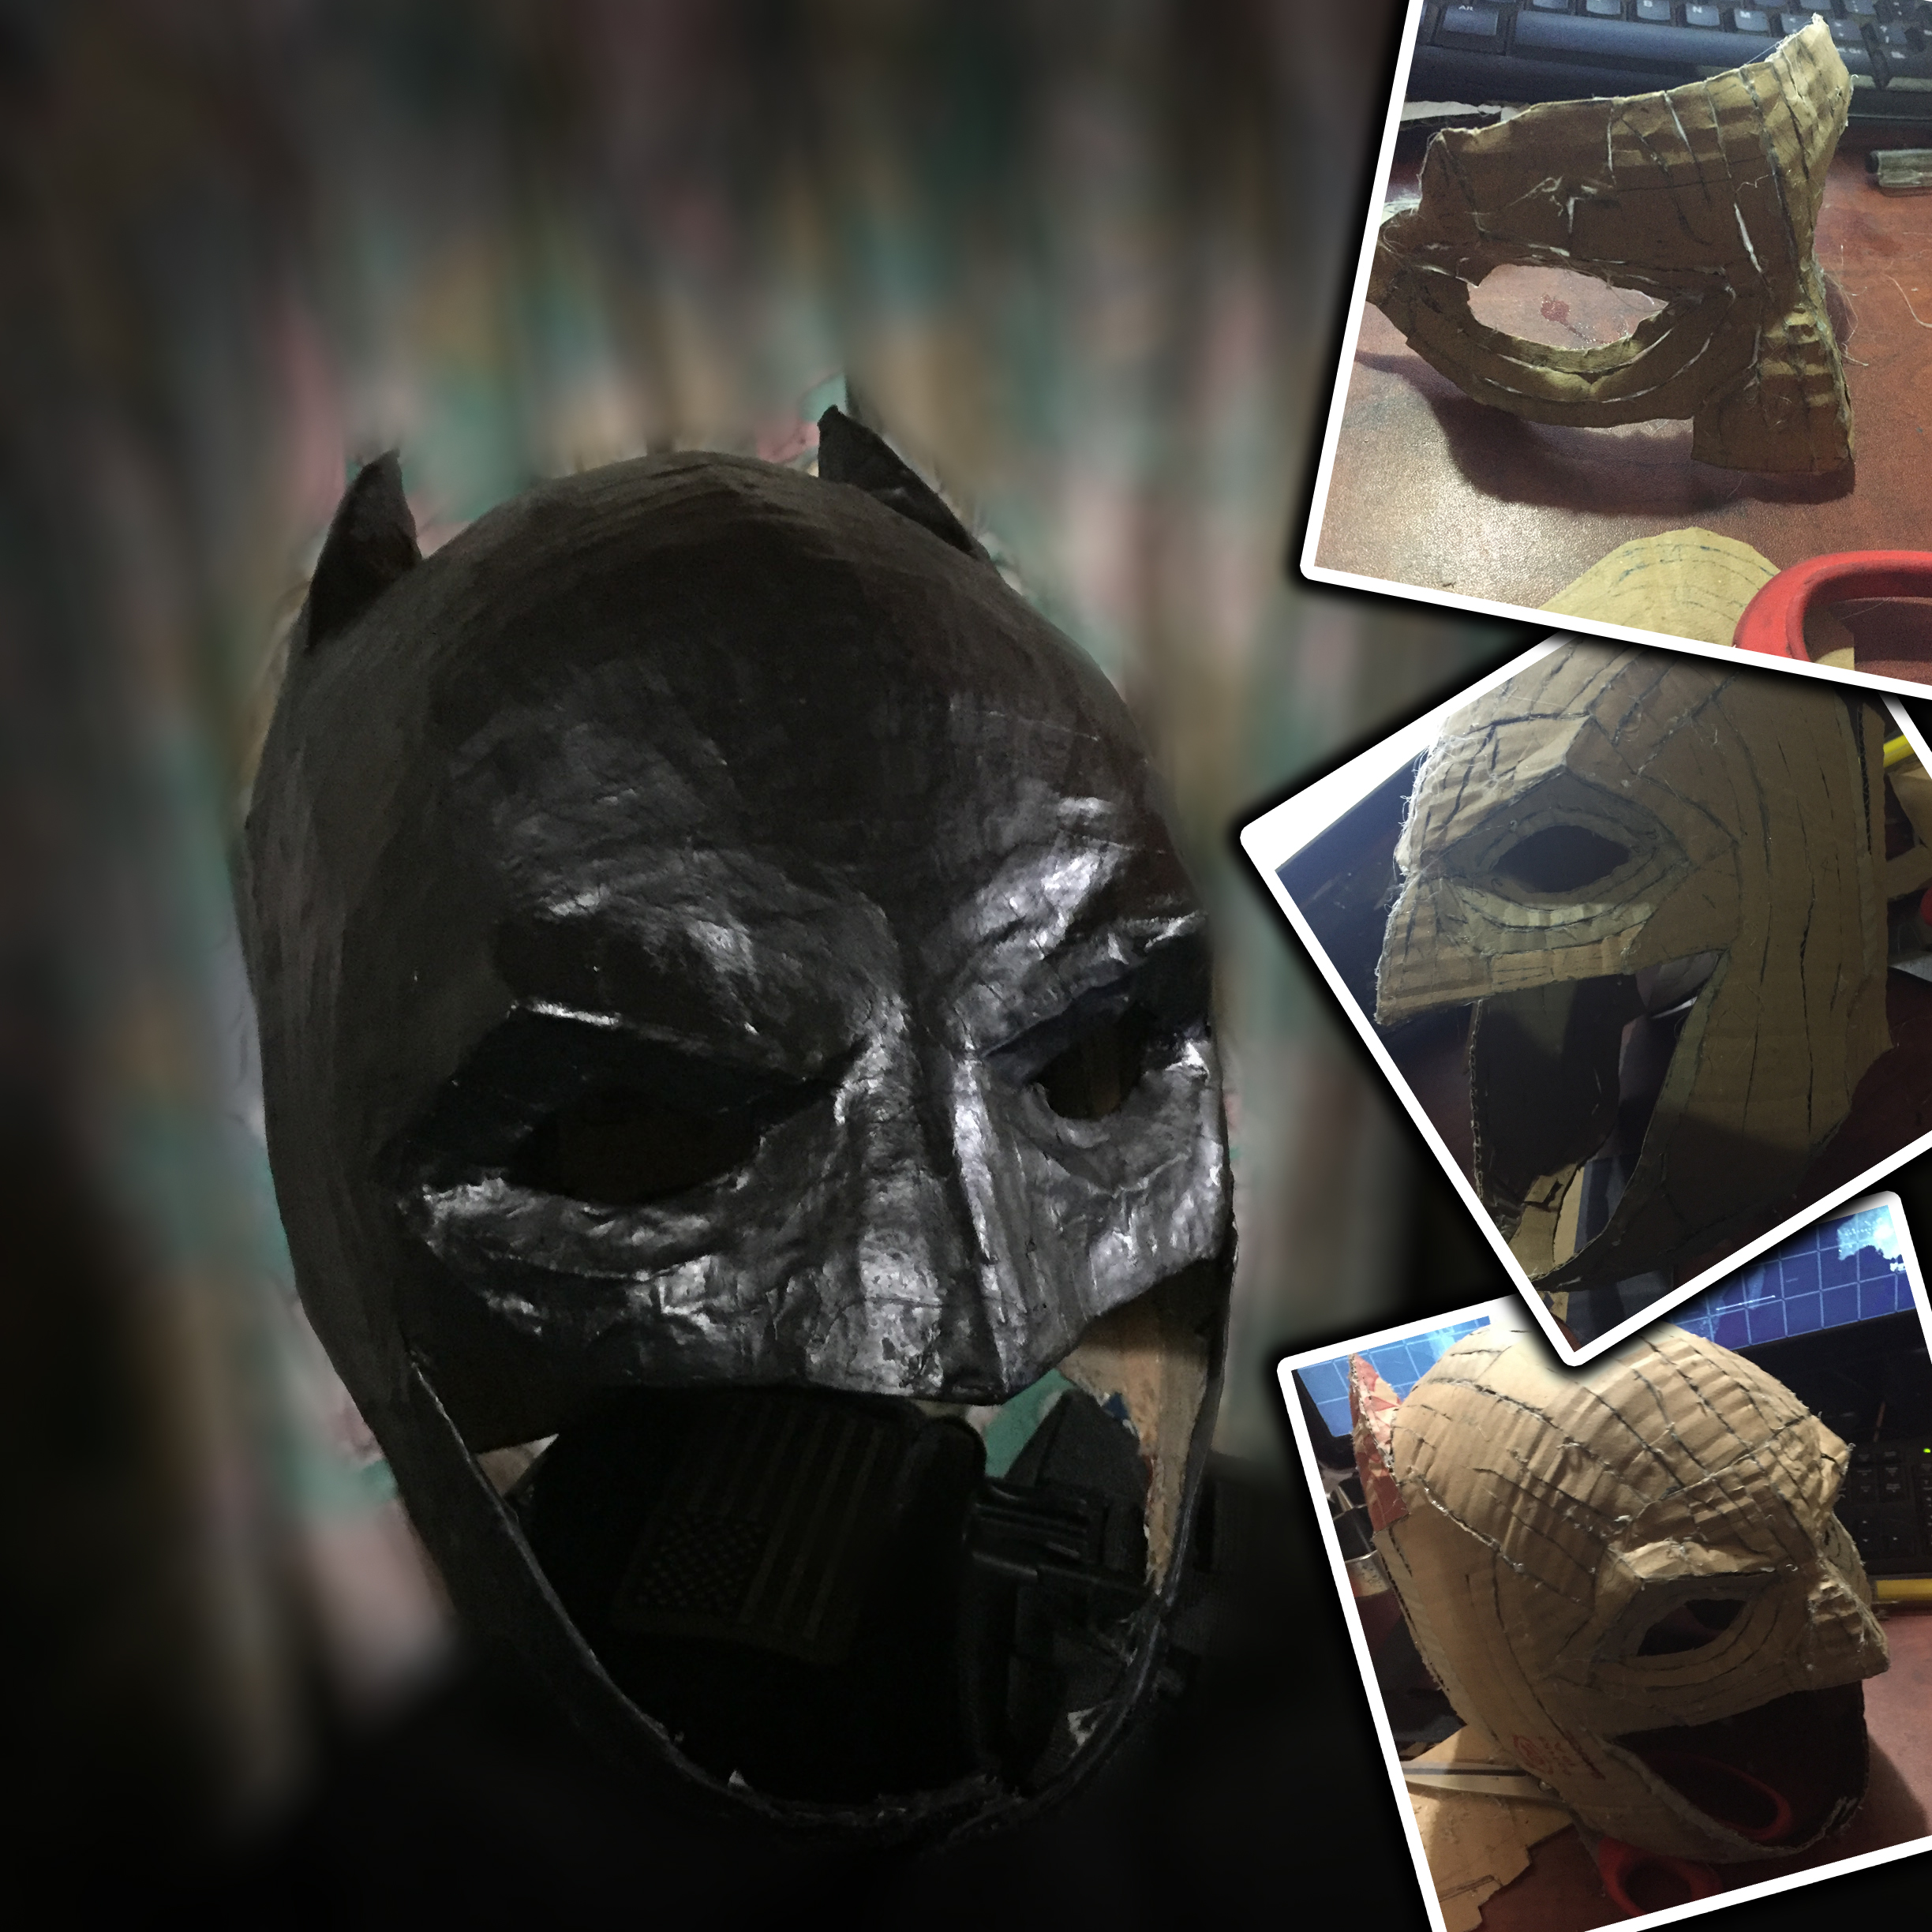 Watch the Batman mask emerge! Credits: Chathurinda Sumithraarachchi